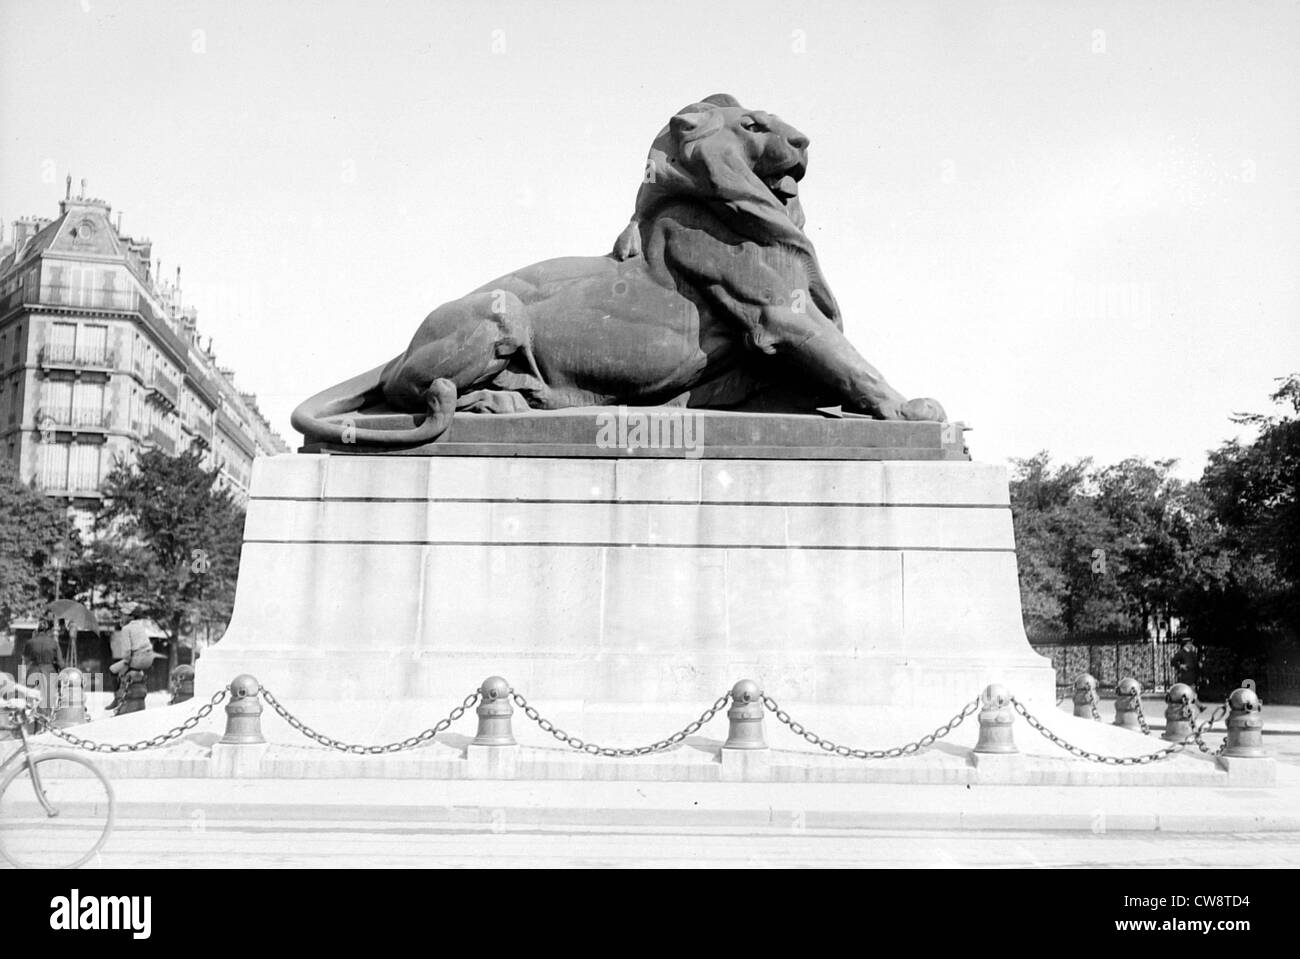 Lion belfort paris hi-res stock photography and images - Alamy